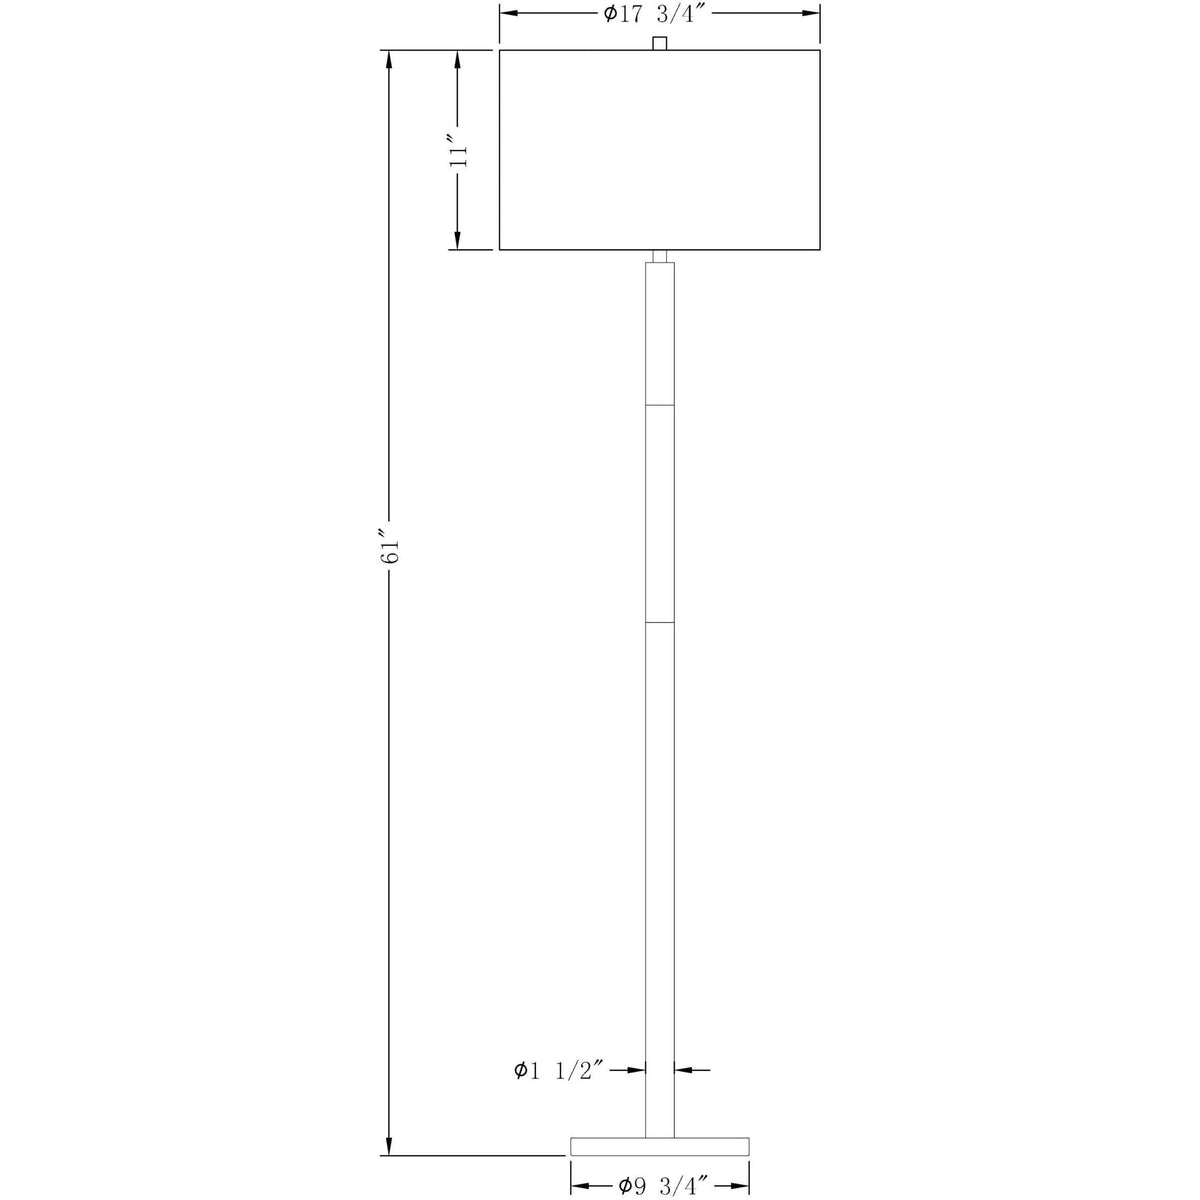 Flow Decor - Poppy Floor Lamp - 3719 | Montreal Lighting & Hardware